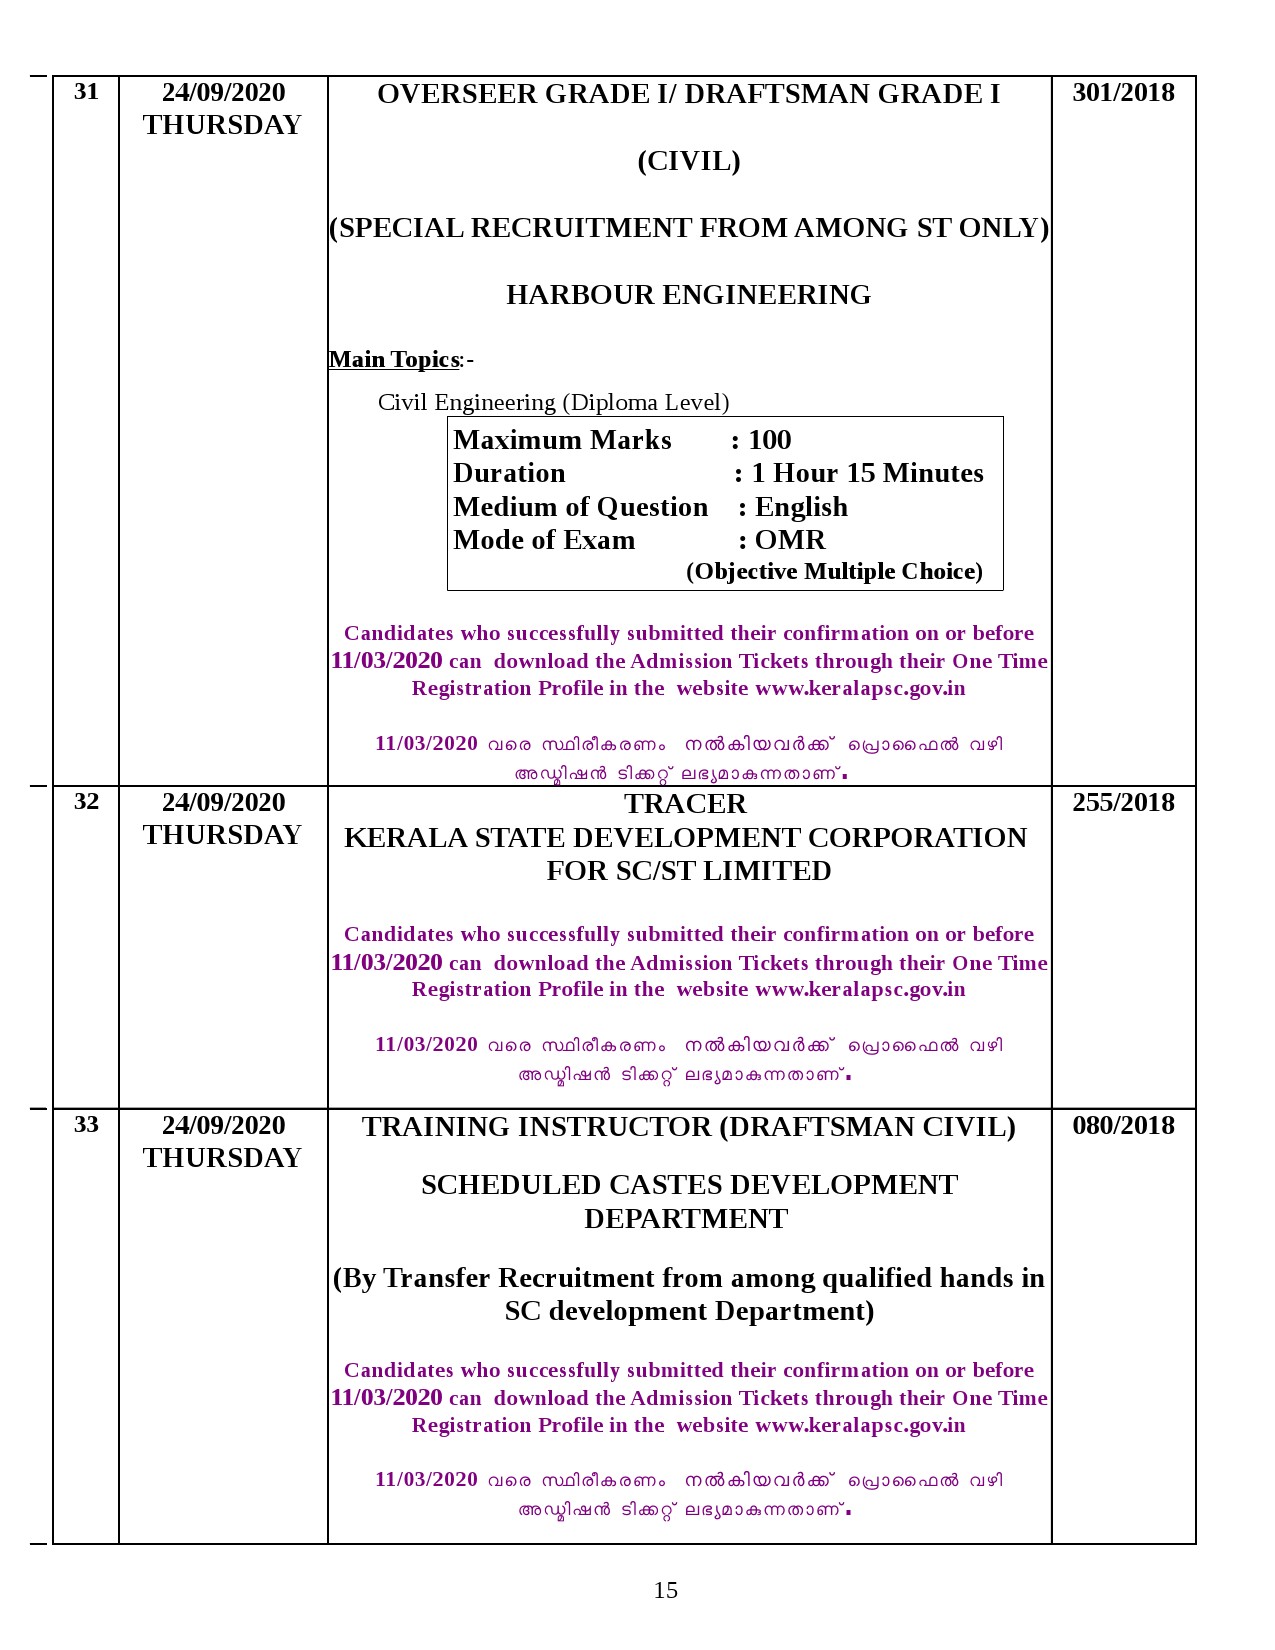 Kerala PSC Exam Calendar September 2020 - Notification Image 15